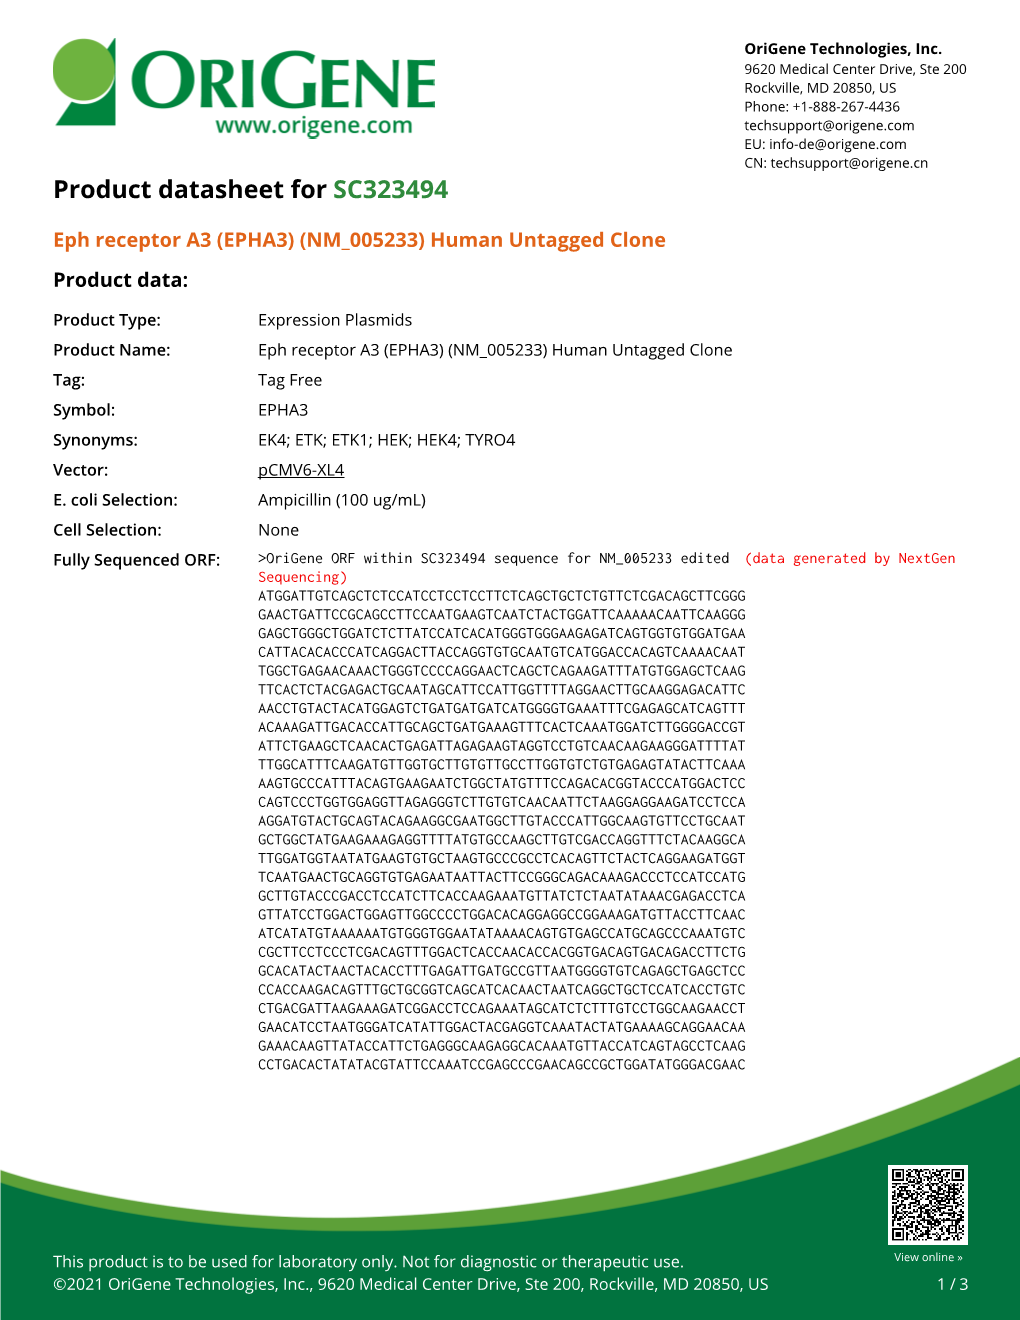 Eph Receptor A3 (EPHA3) (NM 005233) Human Untagged Clone Product Data